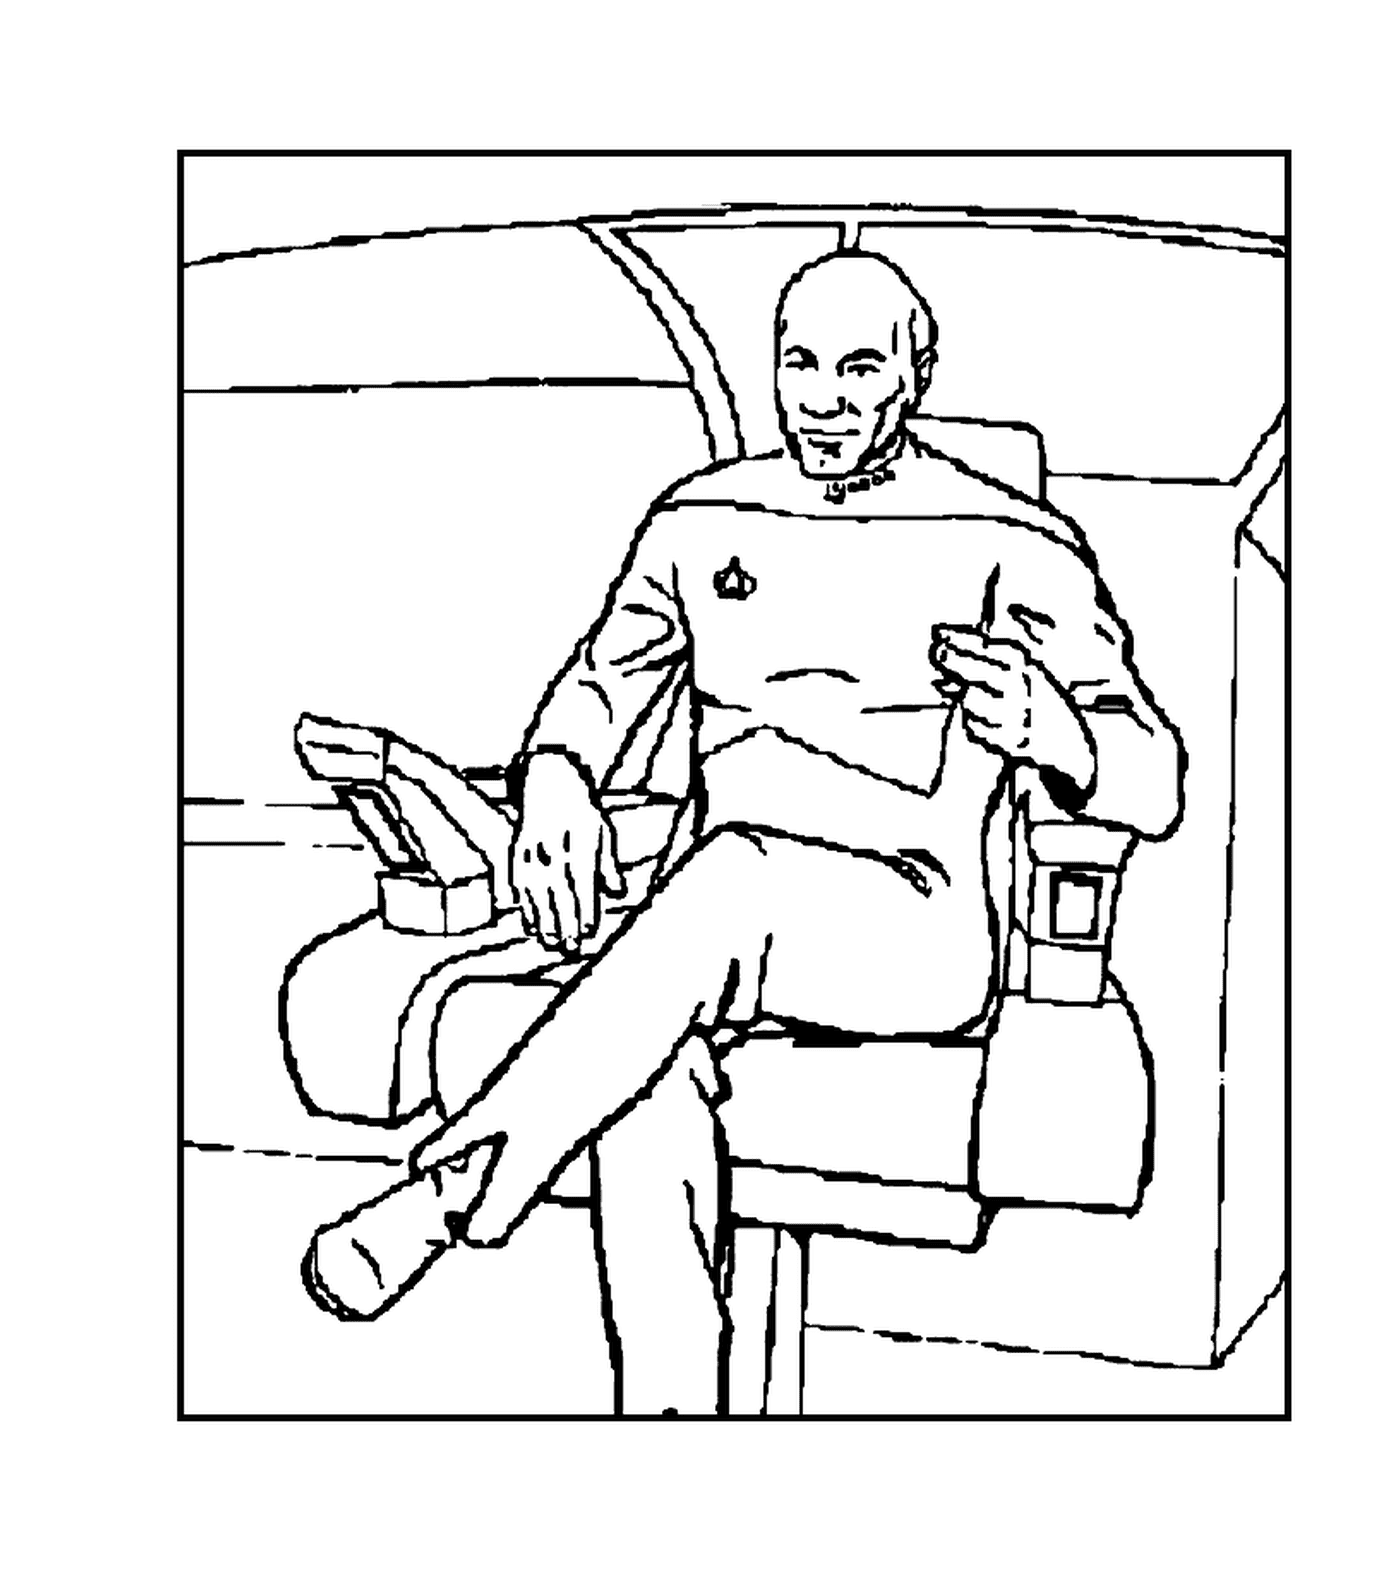  Ein Star Trek-Charakter in einem Sessel 